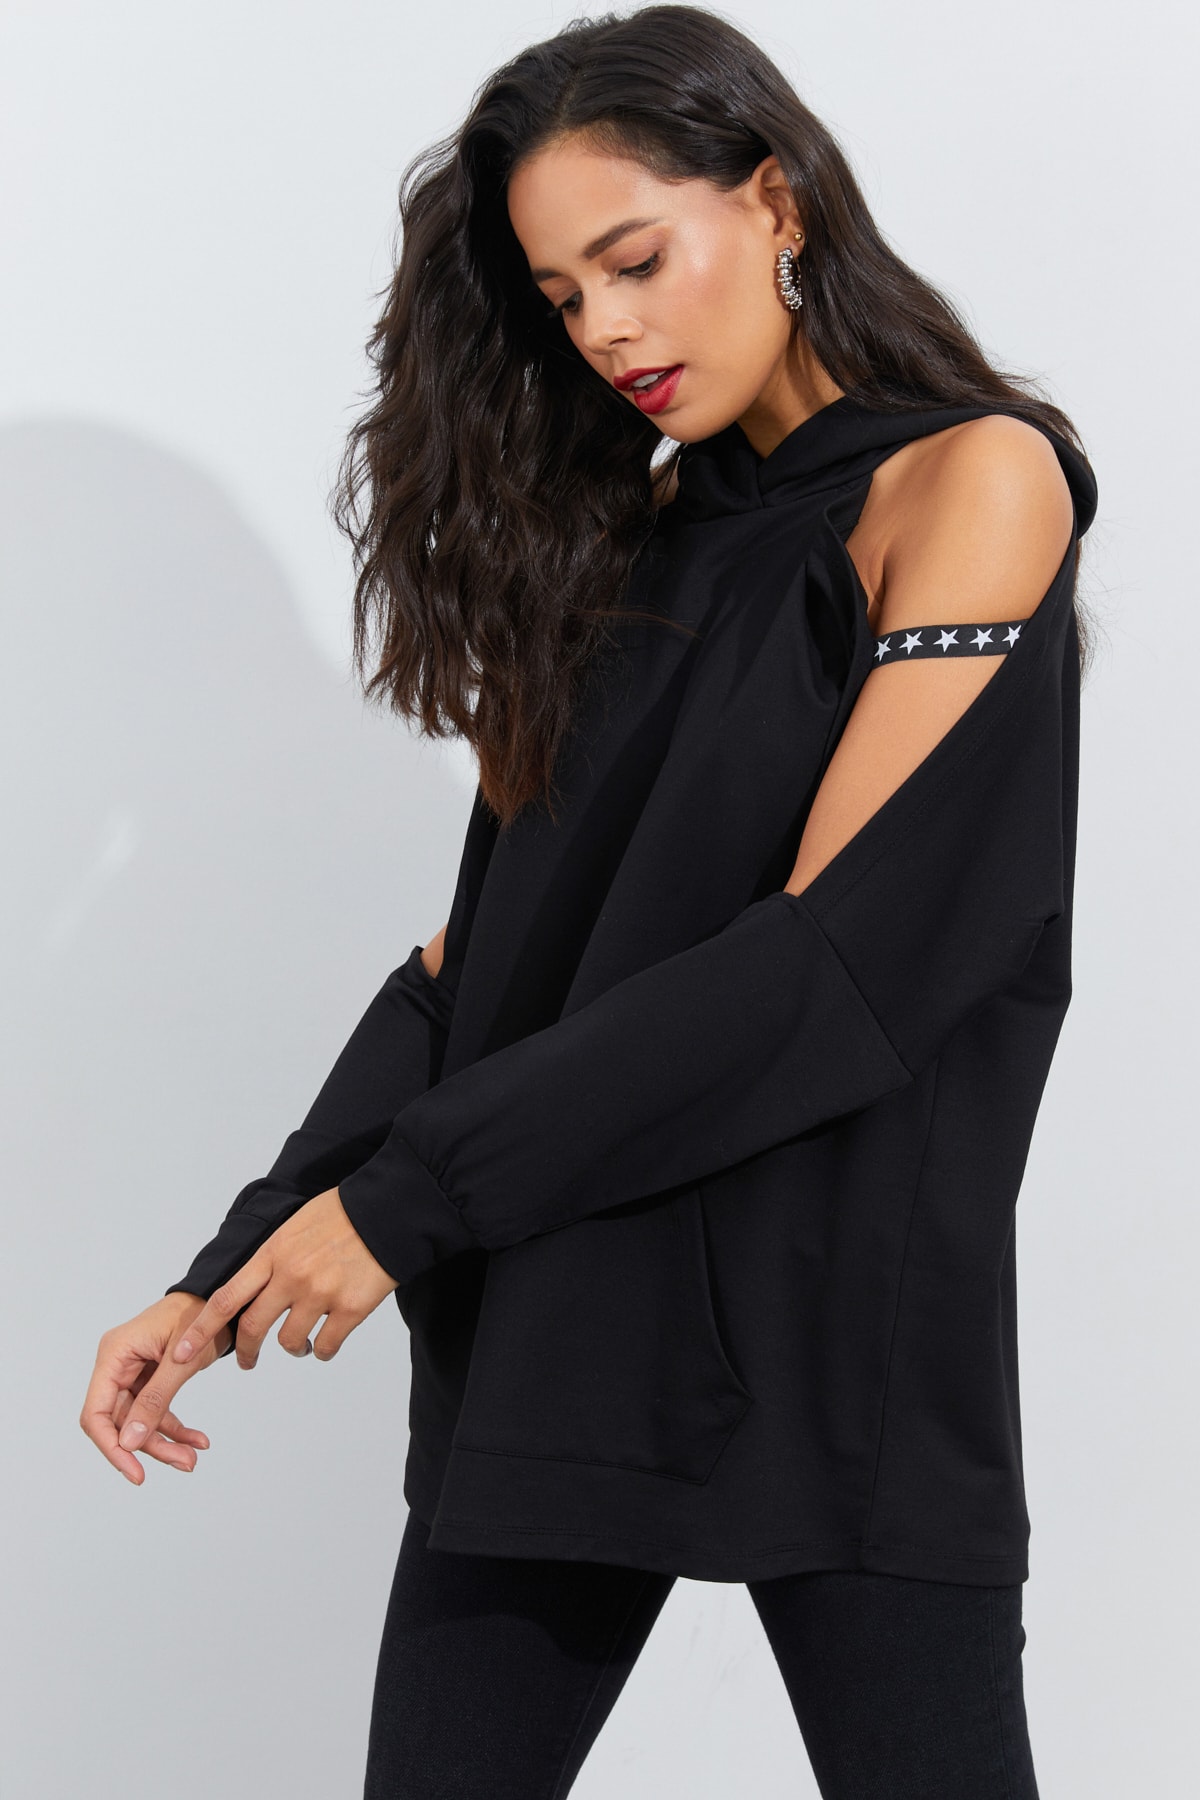 Cool & Sexy Women's Black Open Sleeves Hoodie Sweatshirt